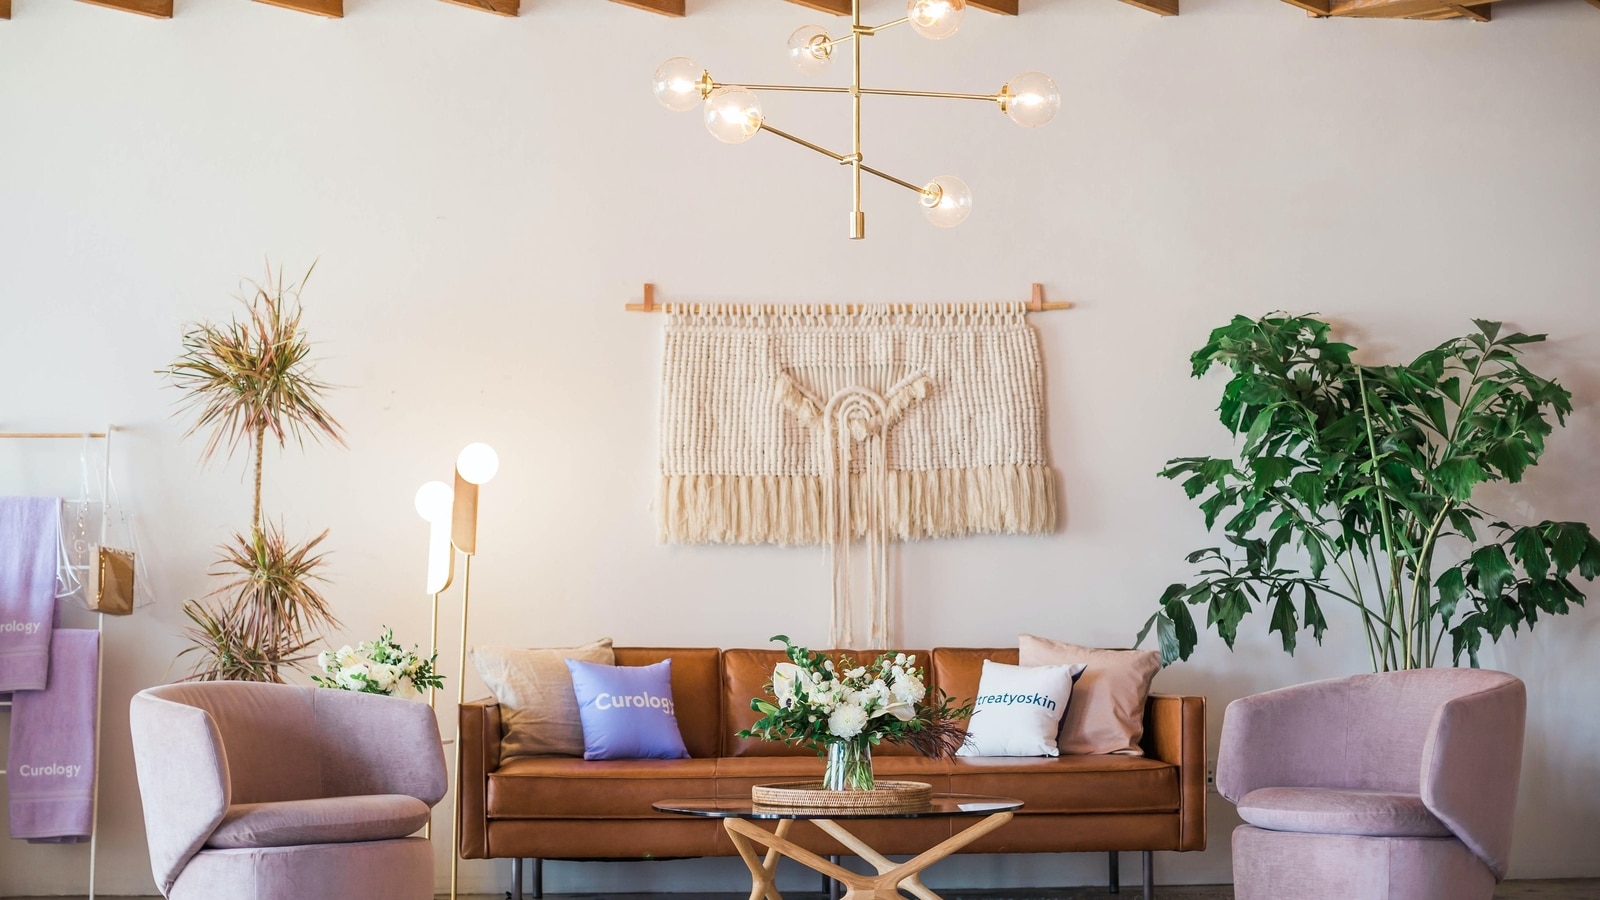 Home interior decor tips: Nascent interior trends for spring/summer 2022